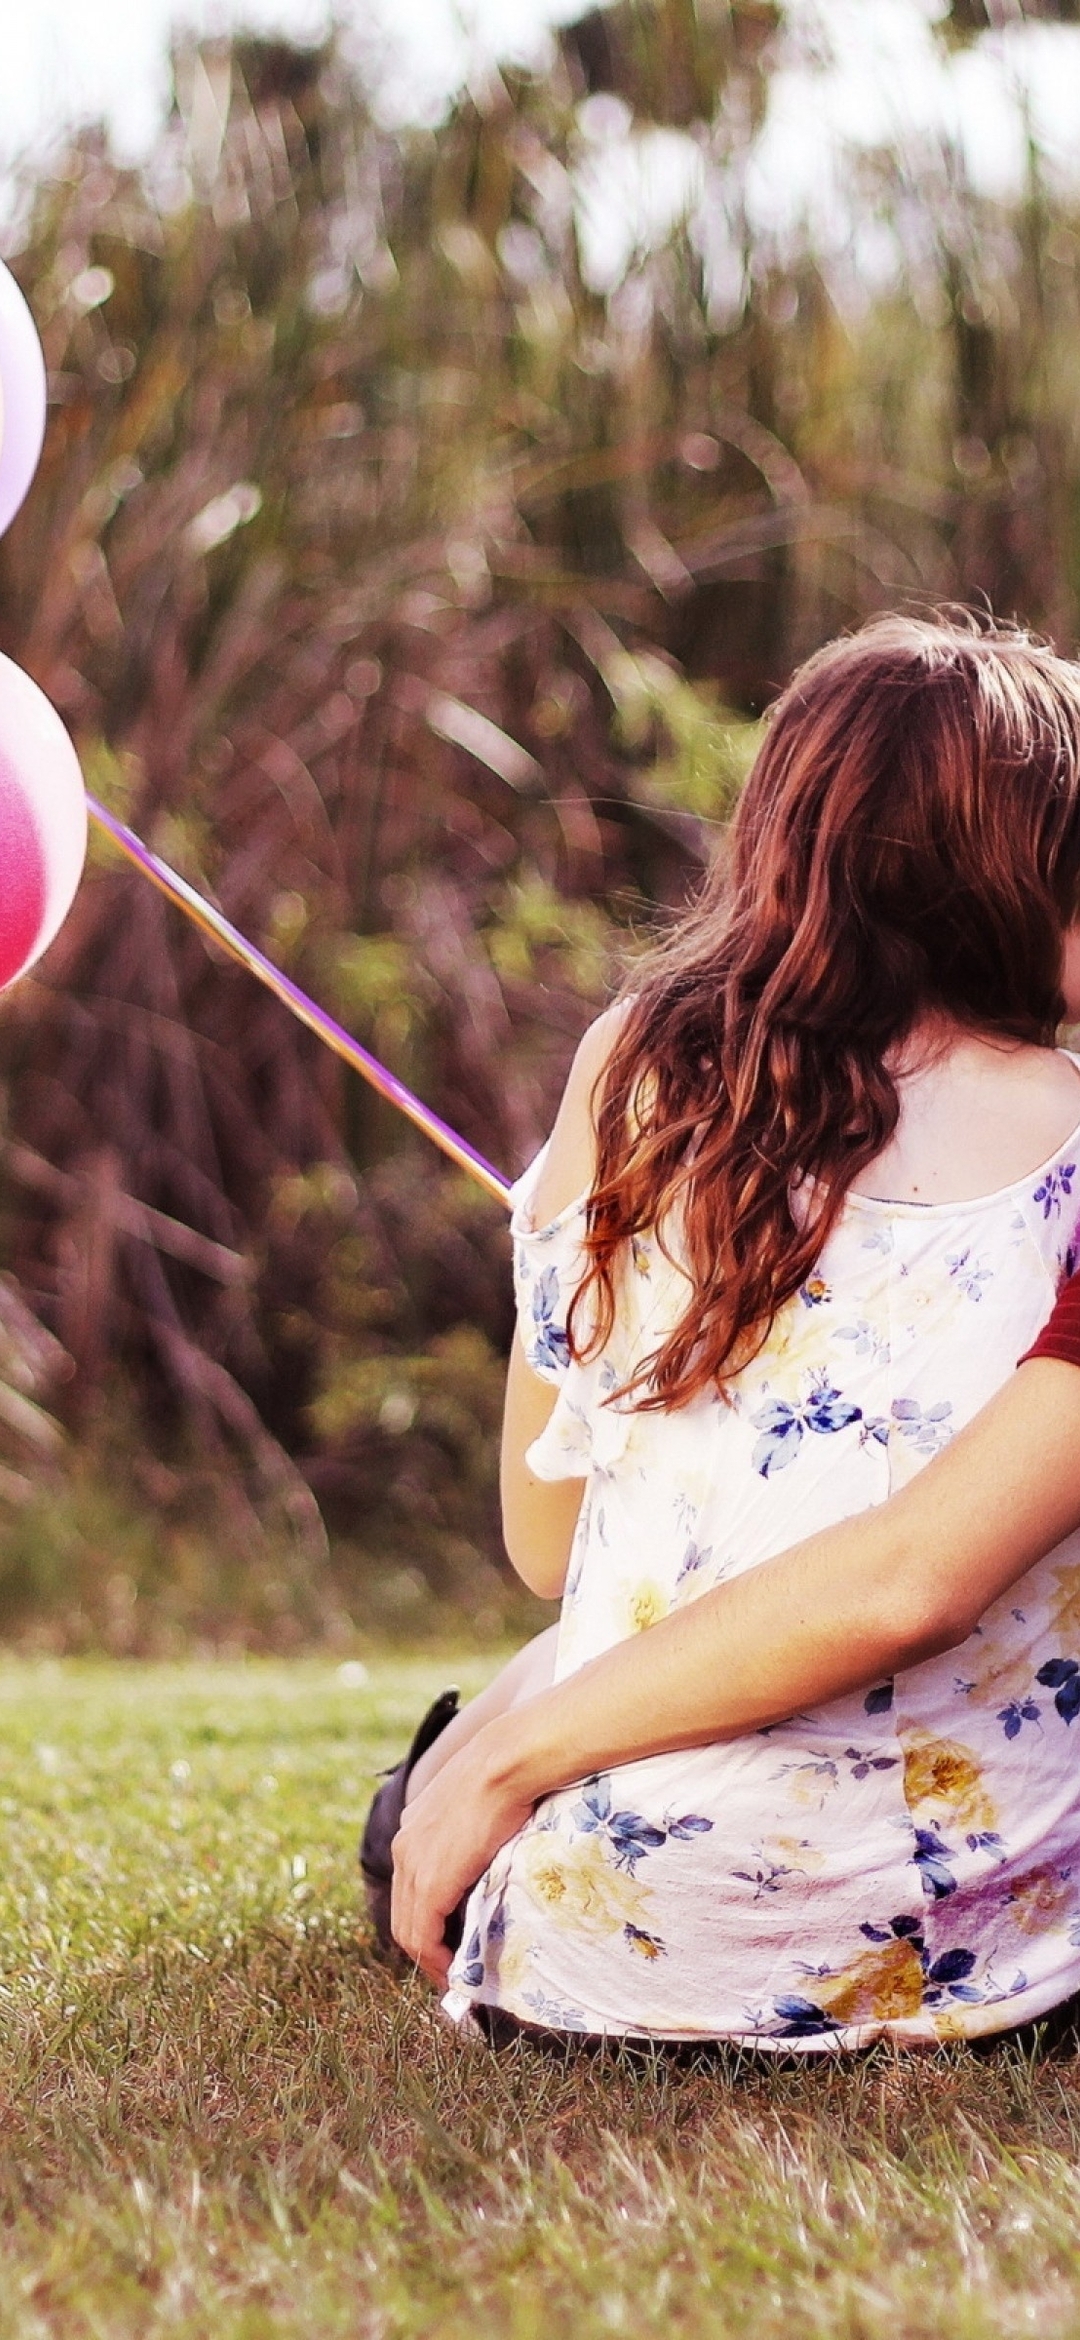 Image: Couple, girl, boyfriend, hugs, kiss, love, balloons, nature